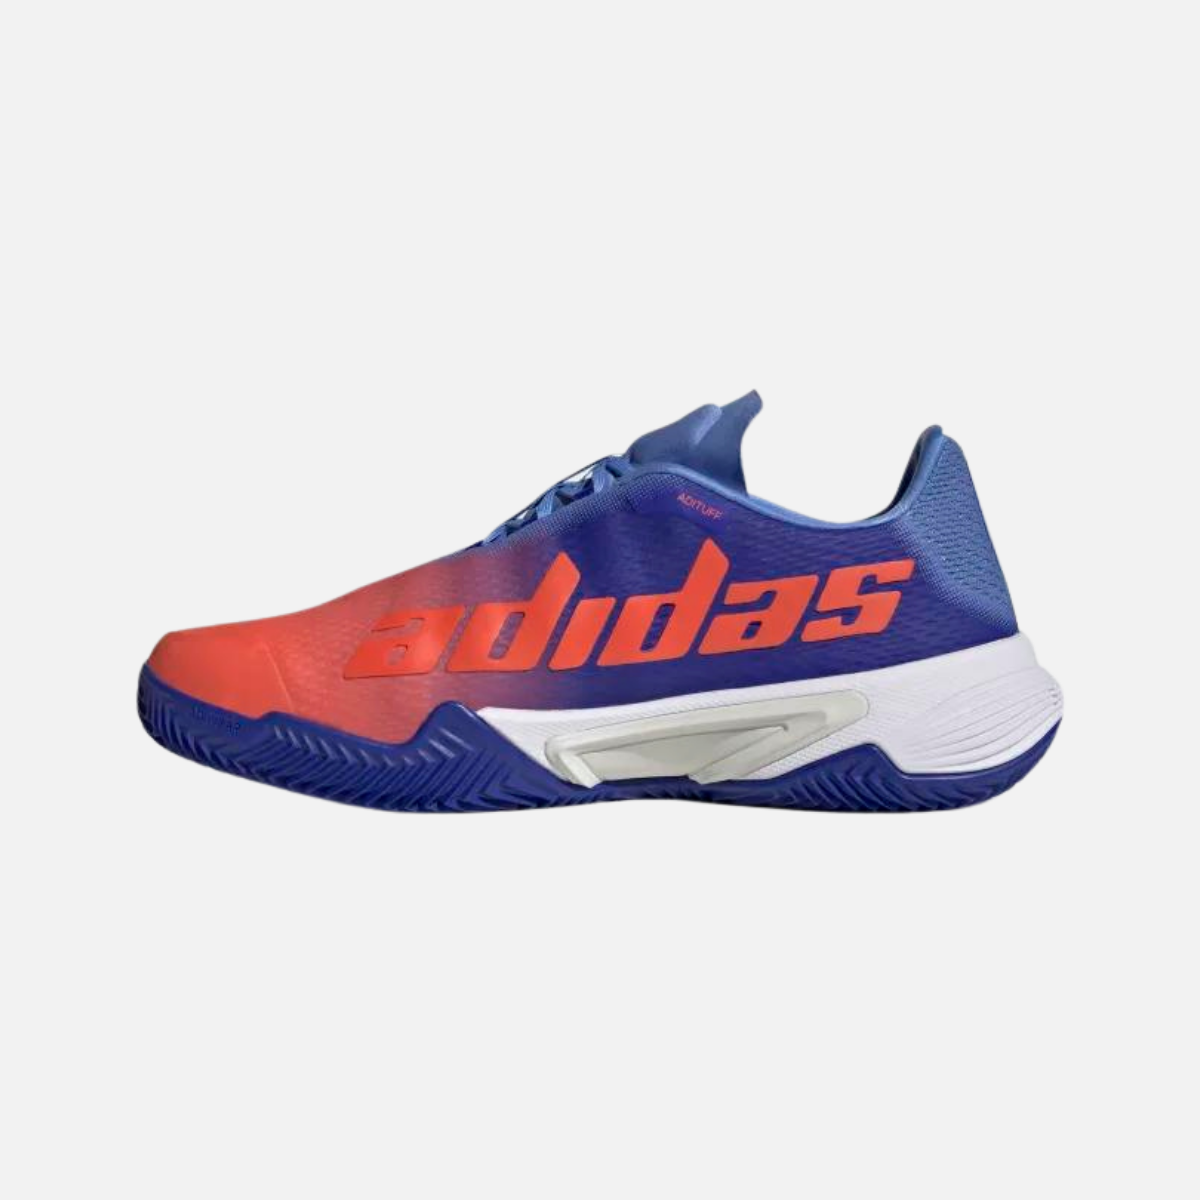 Adidas Barricade Mens Tennis Shoes -Lucid Blue / Solar Red / Blue Fusion